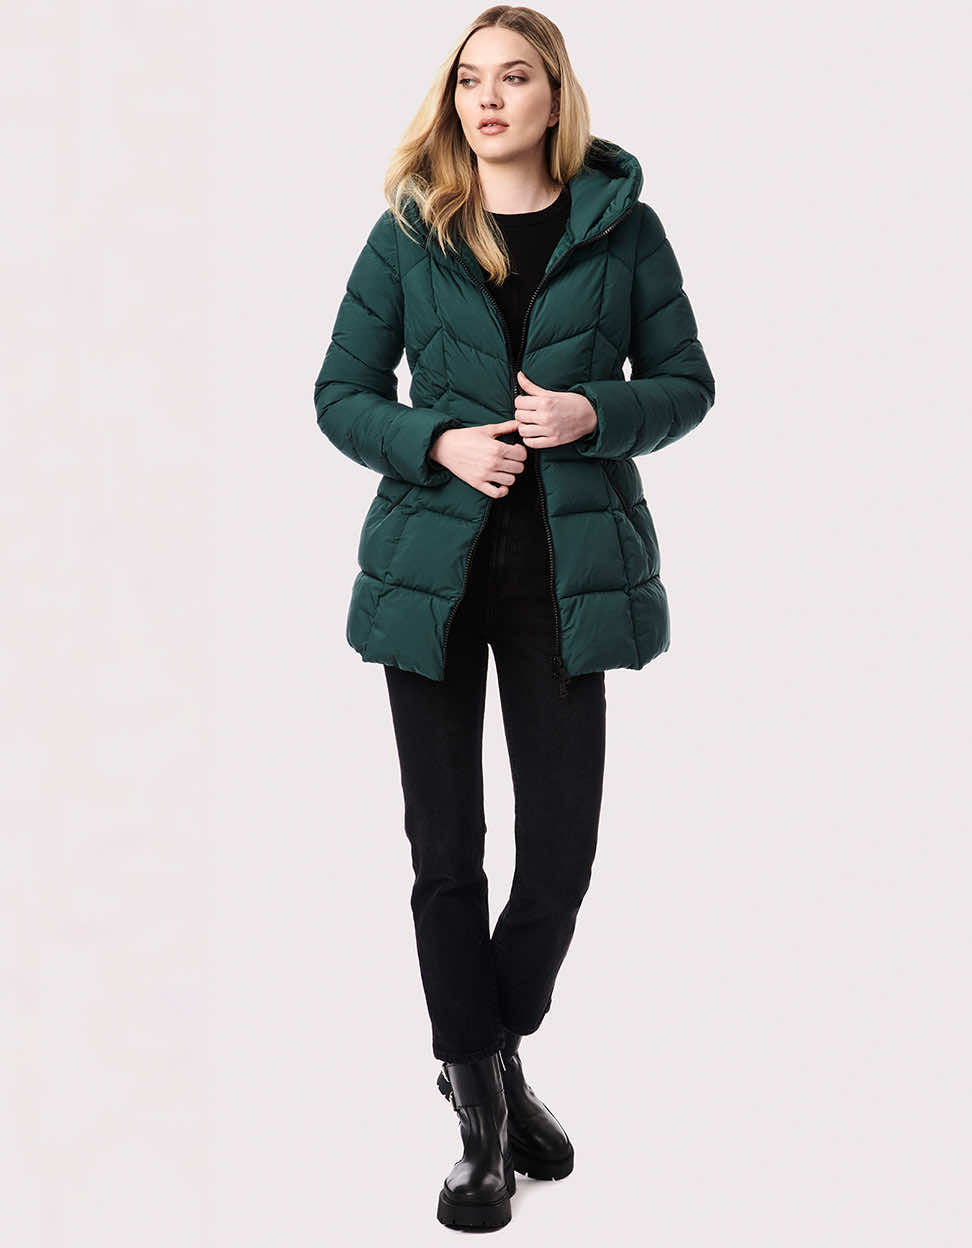 Dark green jacket and pant set | Dark green jacket, Fashion, Aza fashion